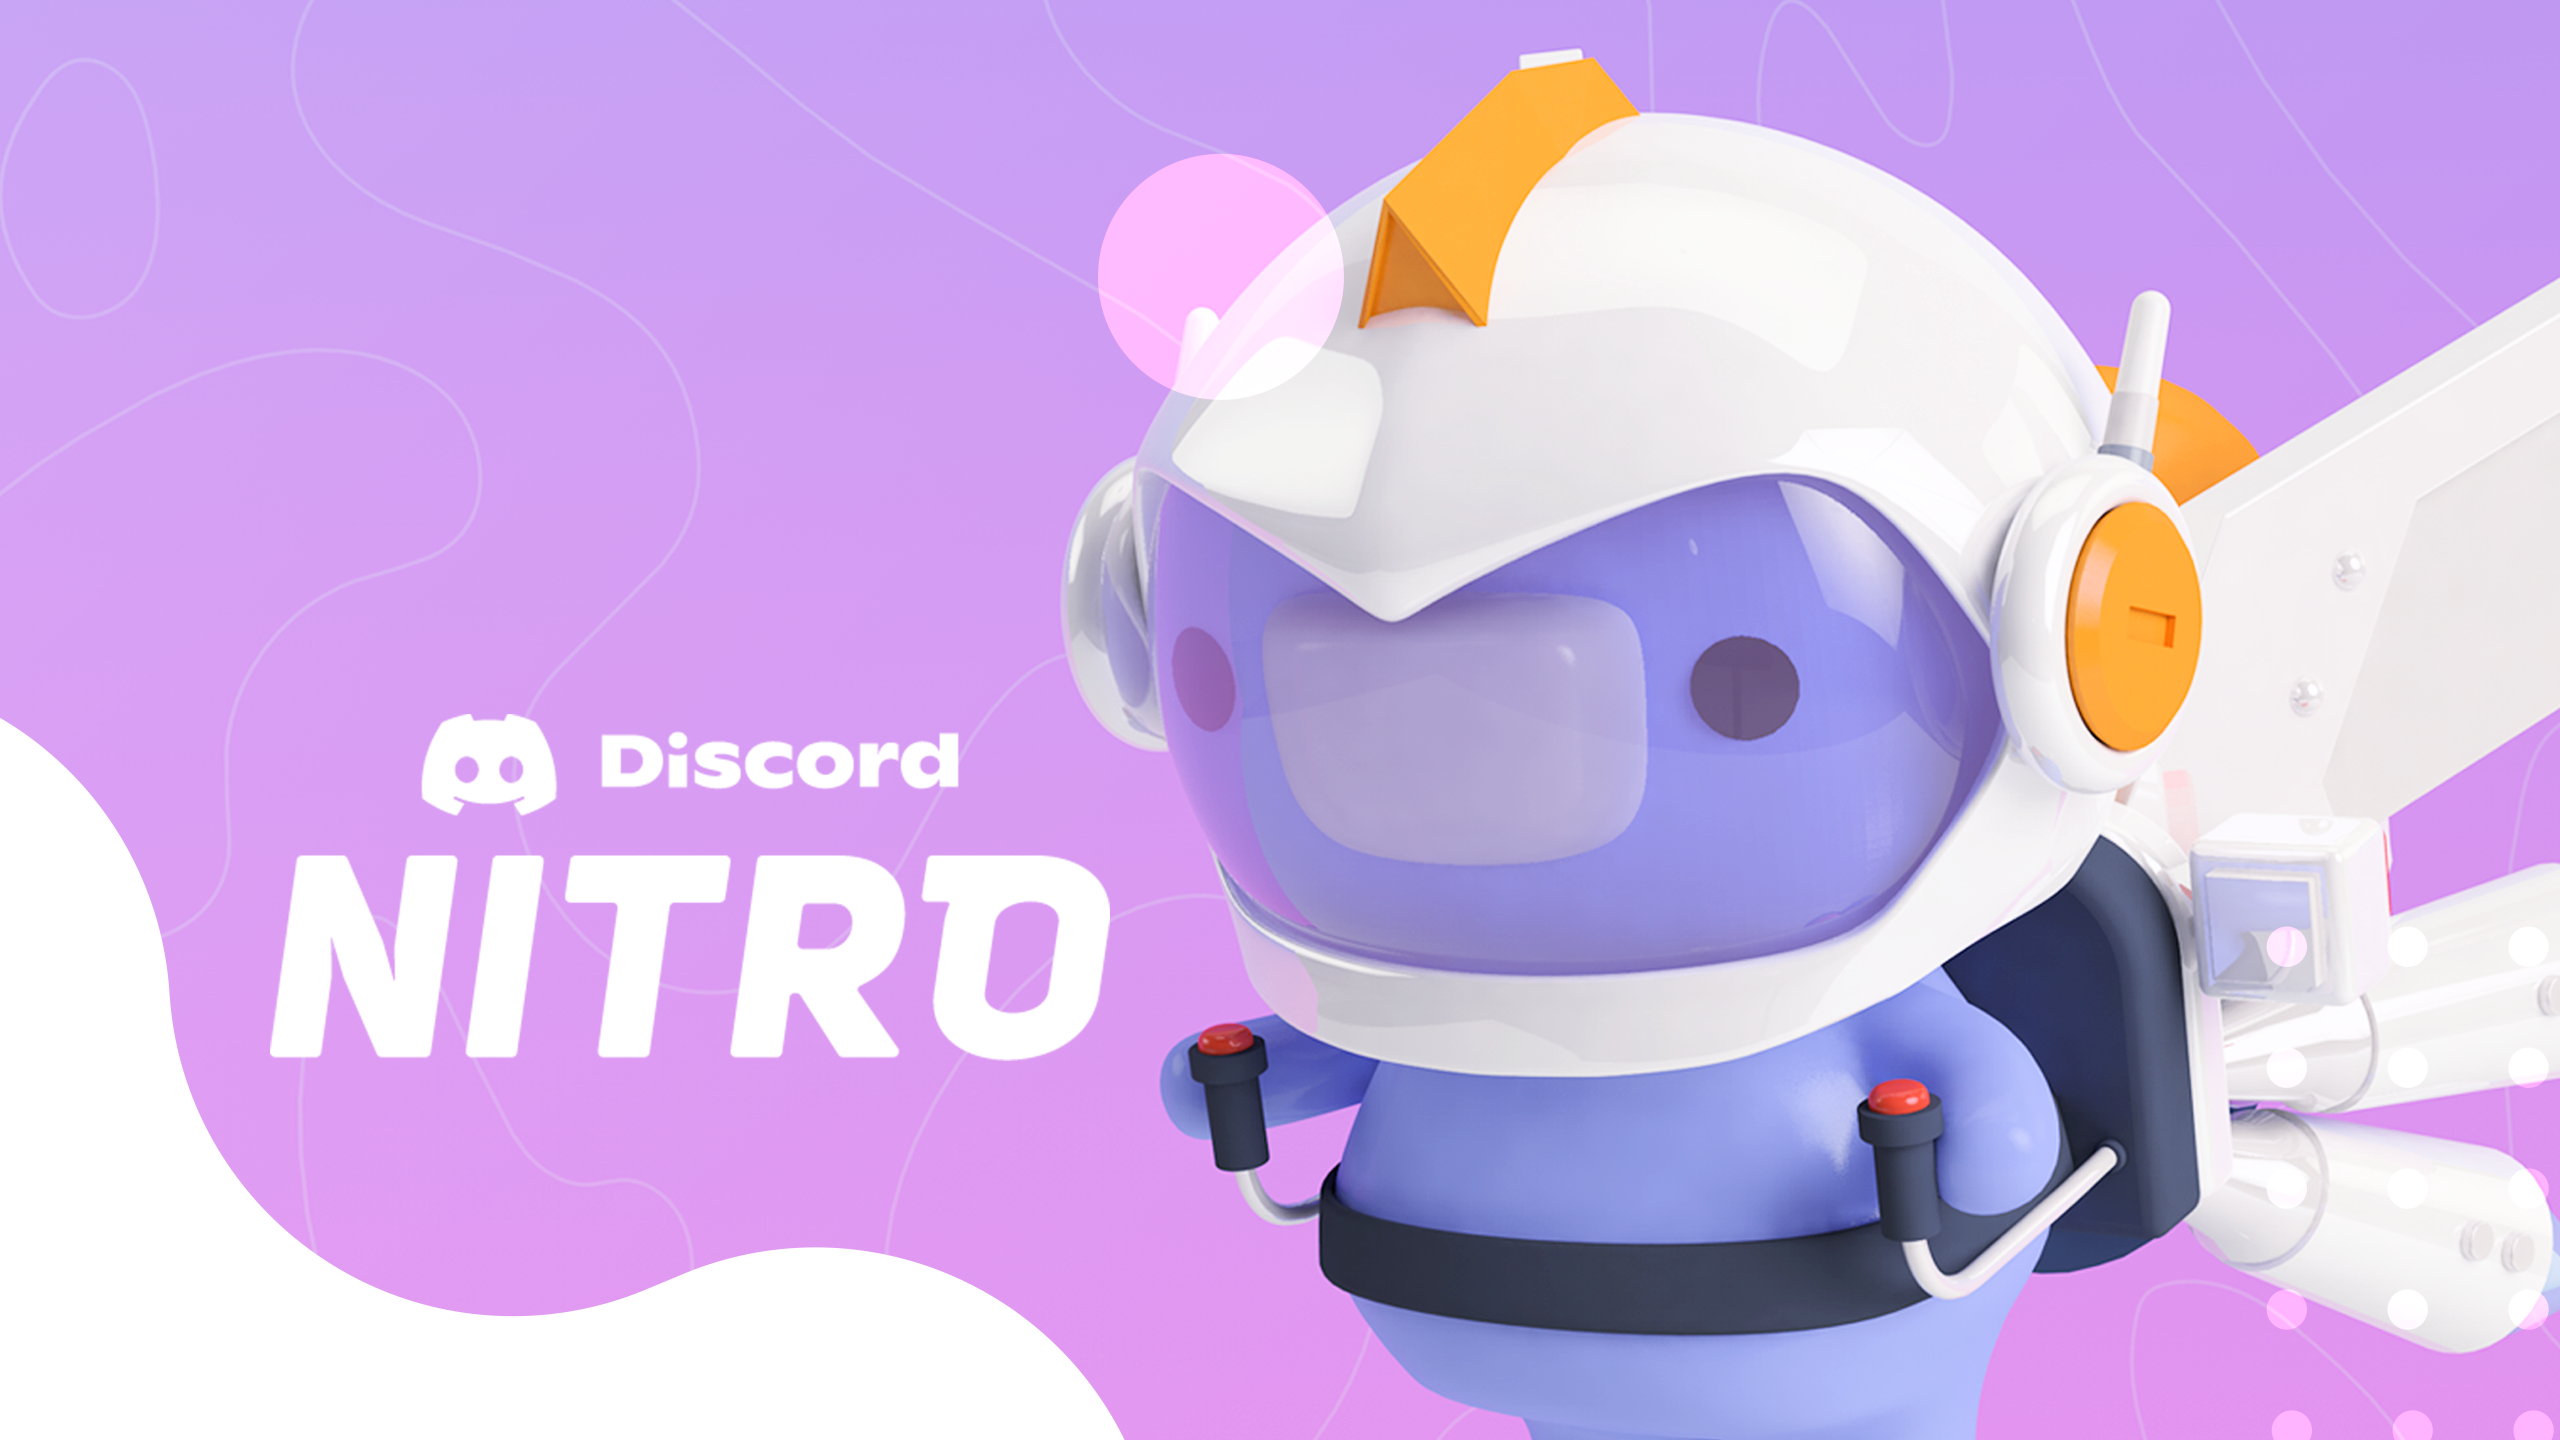 Discord Nitro gratuit pendant 3 mois via l’Epic Games Store !